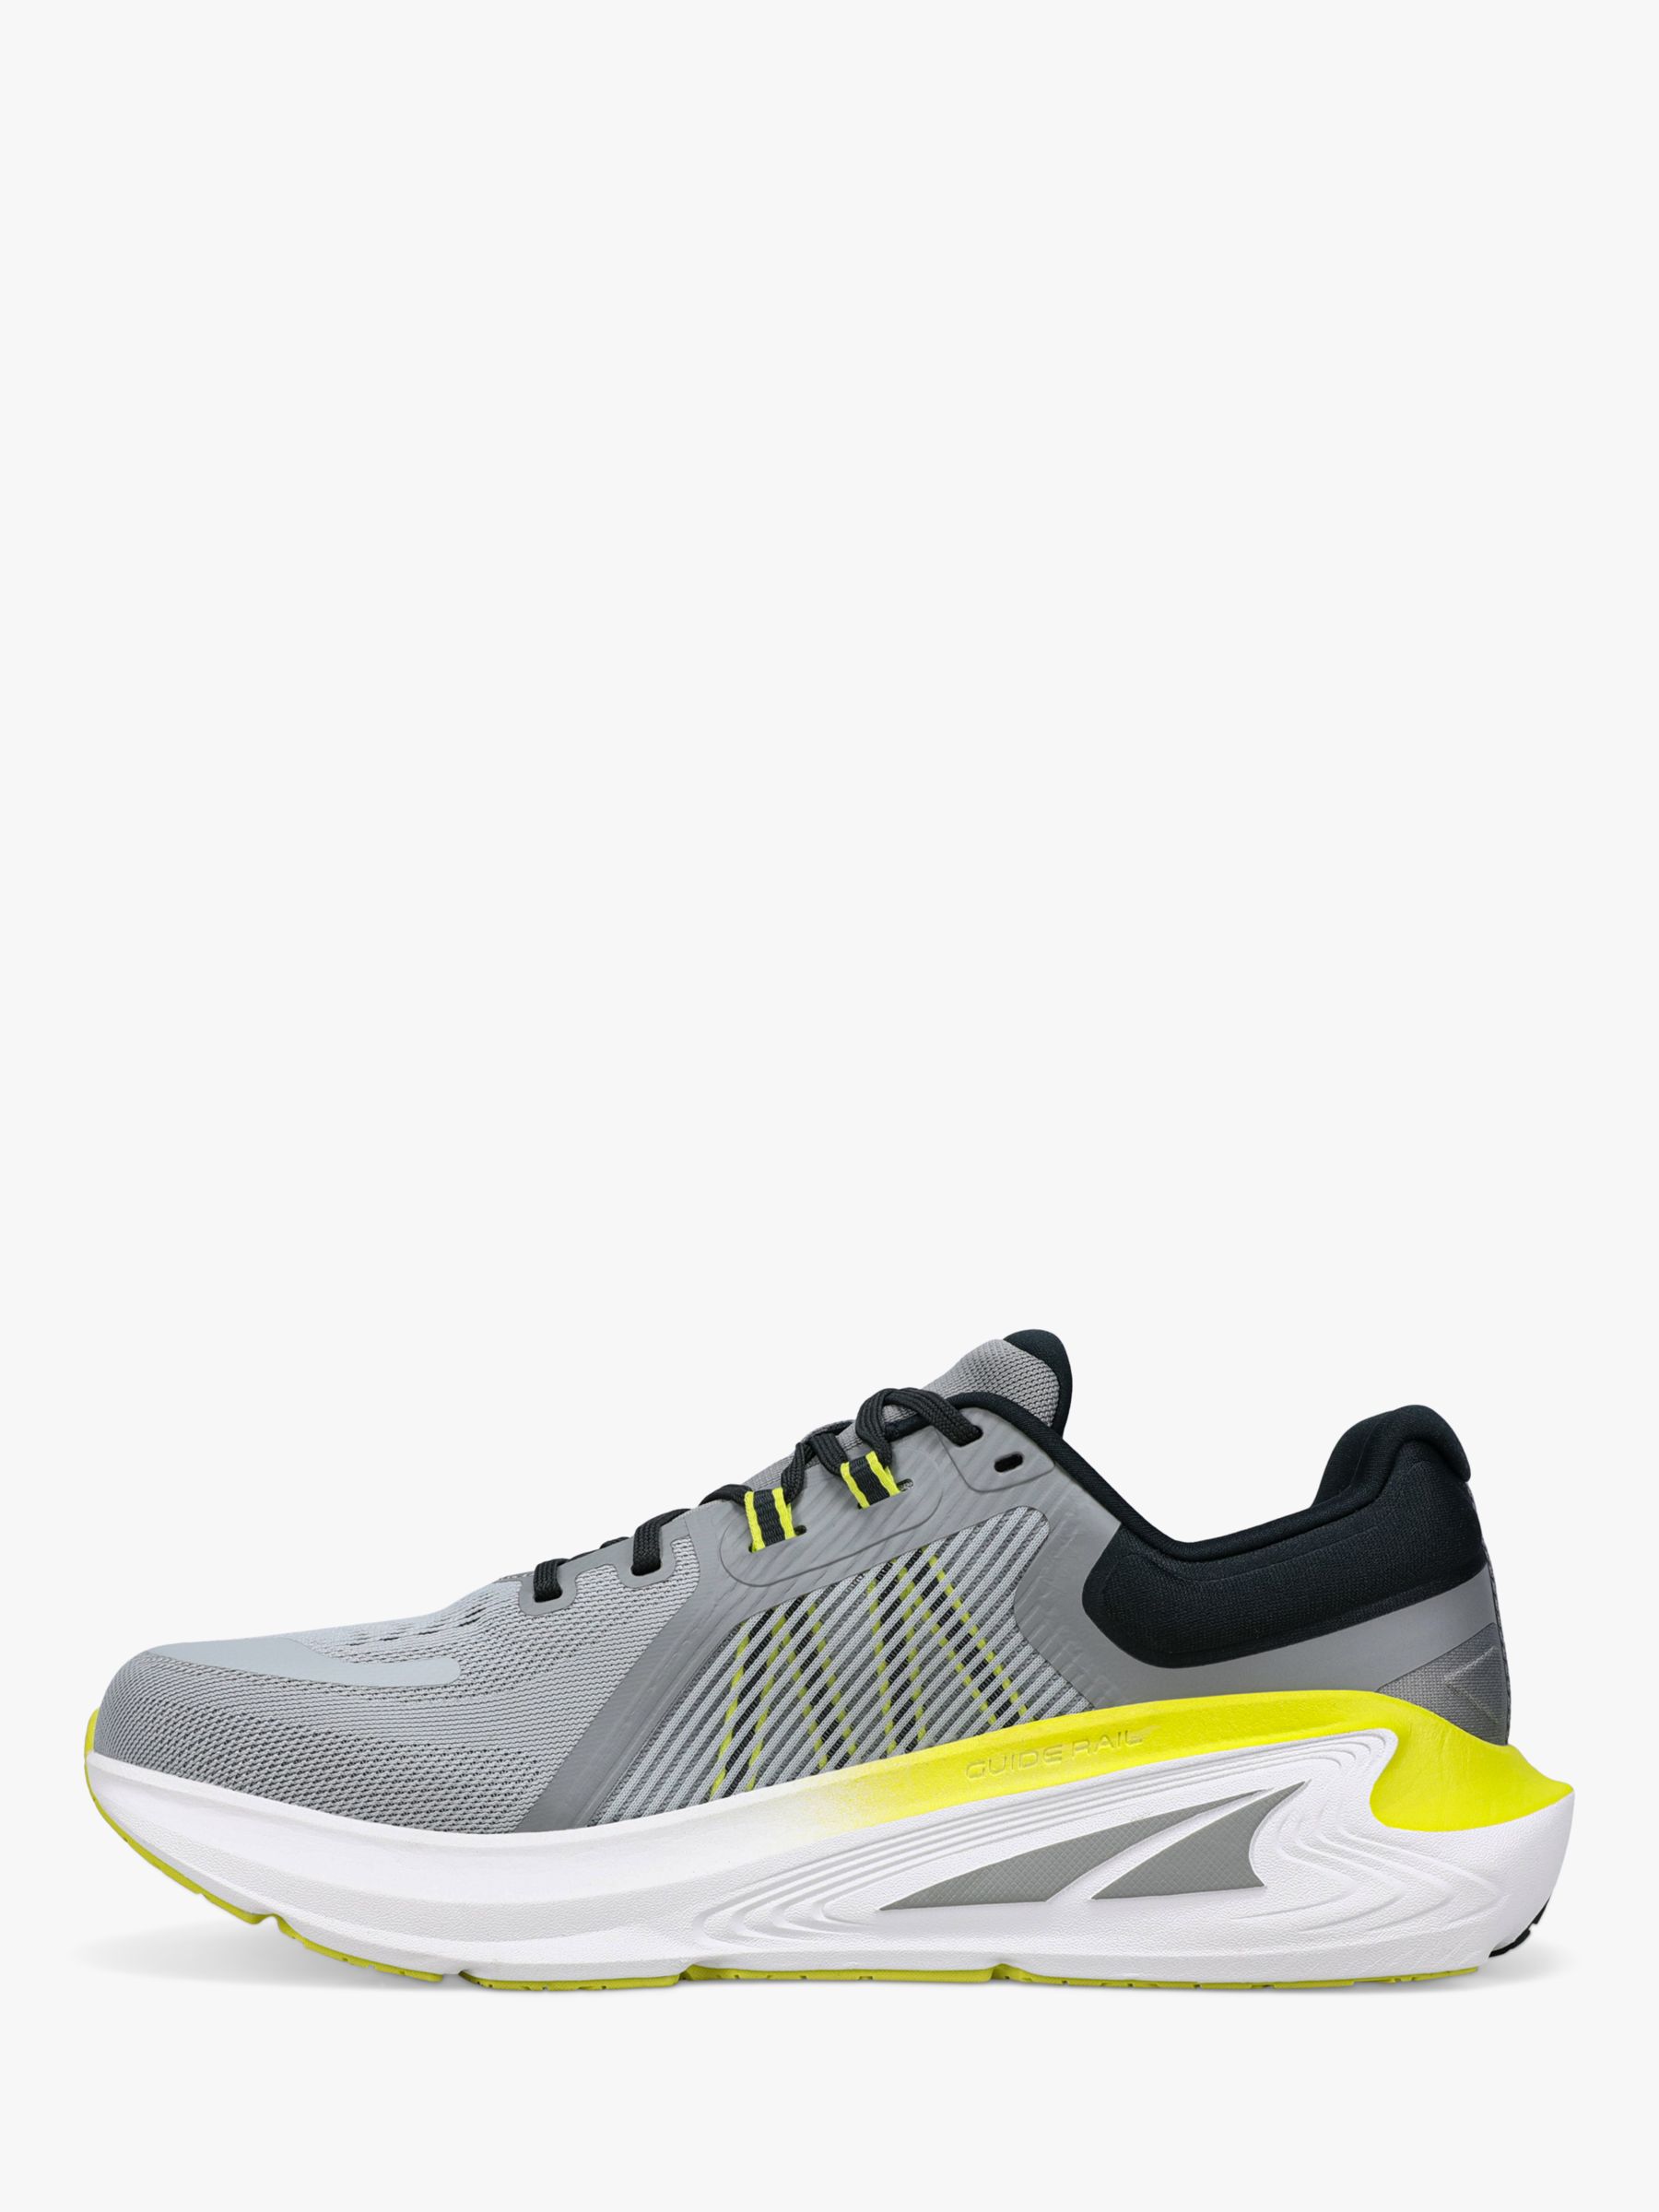 Altra Paradigm 6 Men's Running Shoes, Gray/Lime at John Lewis & Partners